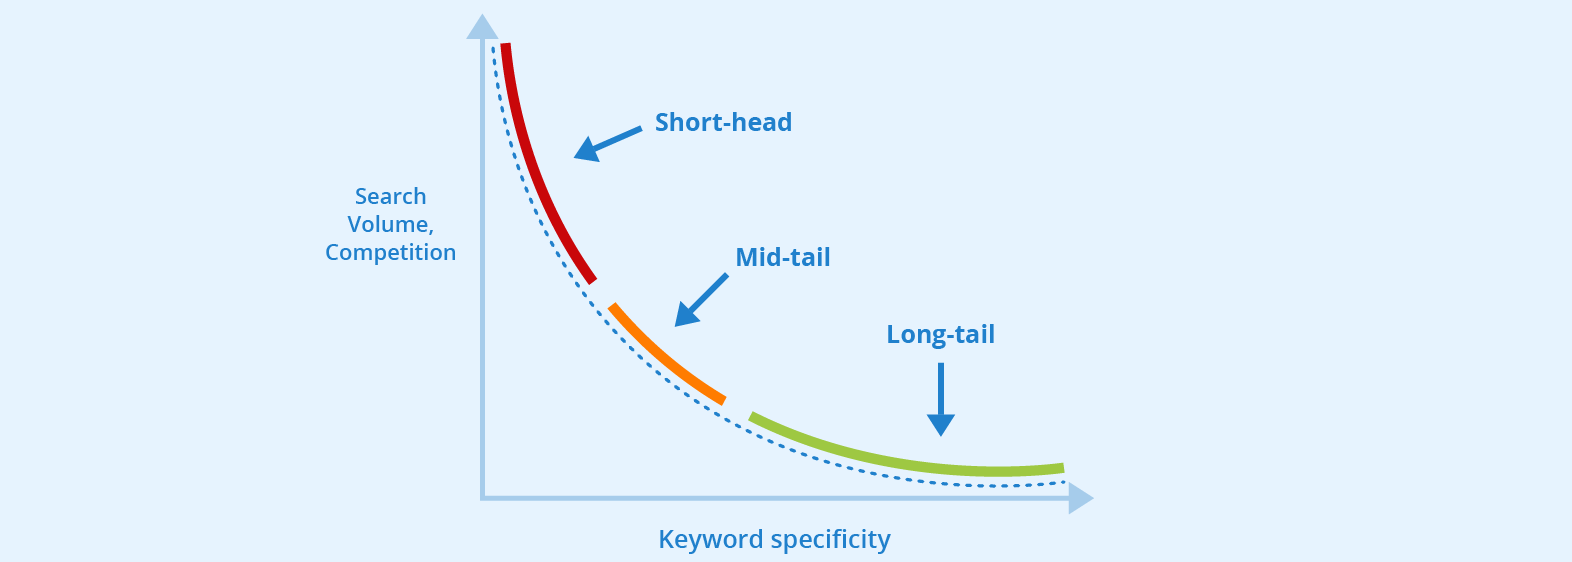 Short vs long, intent driven keywords represented on a graph